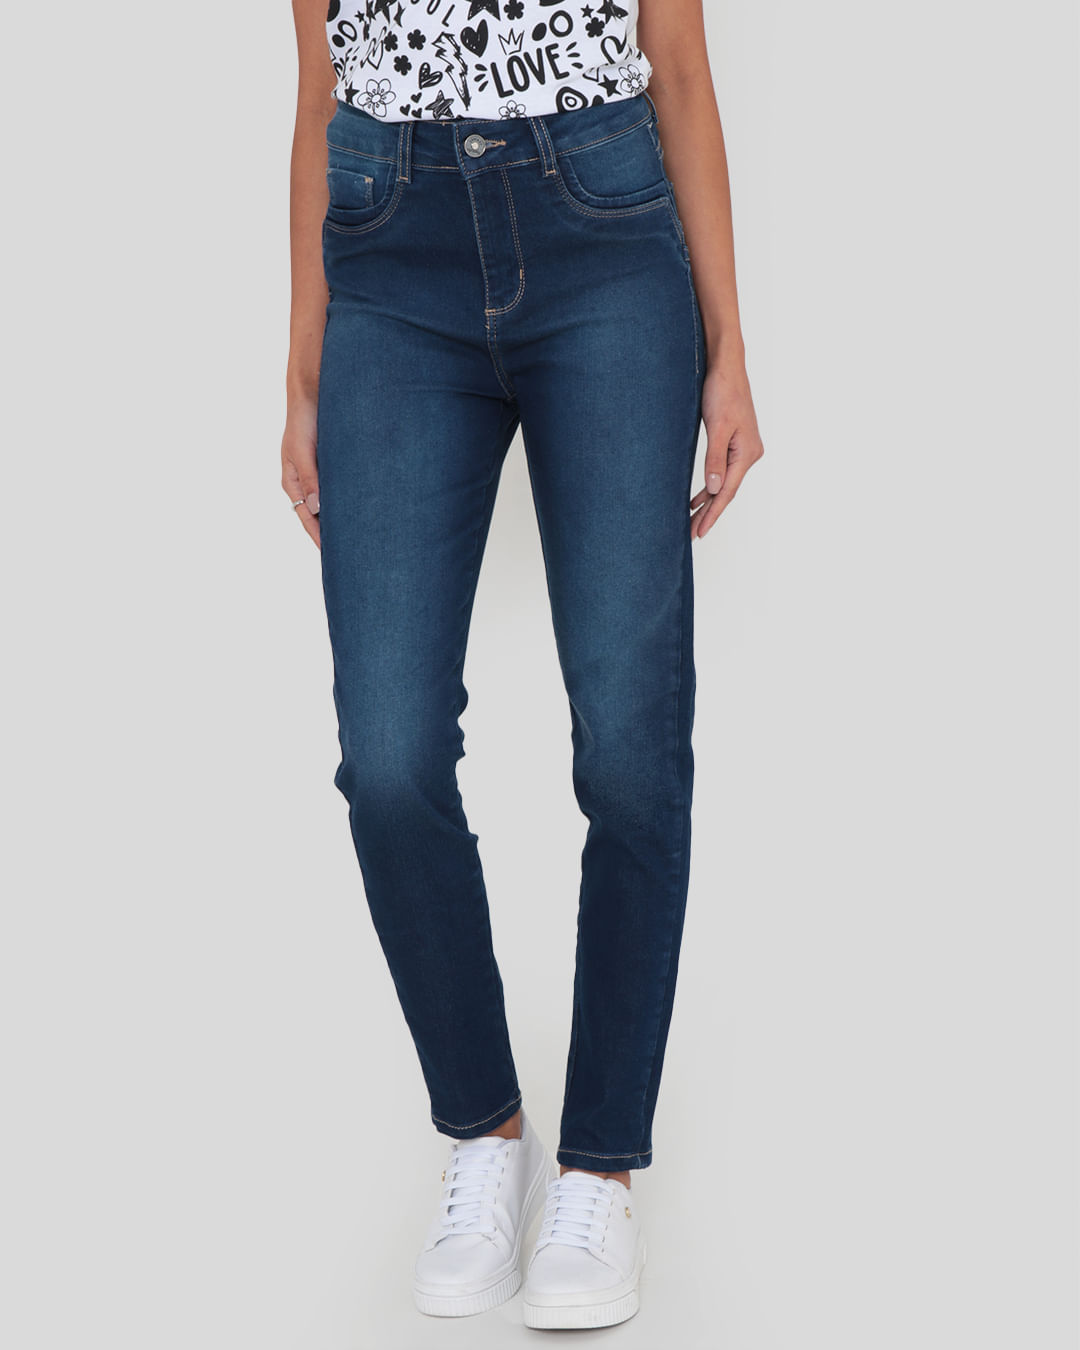 13121001188045-blue-jeans-medio-1